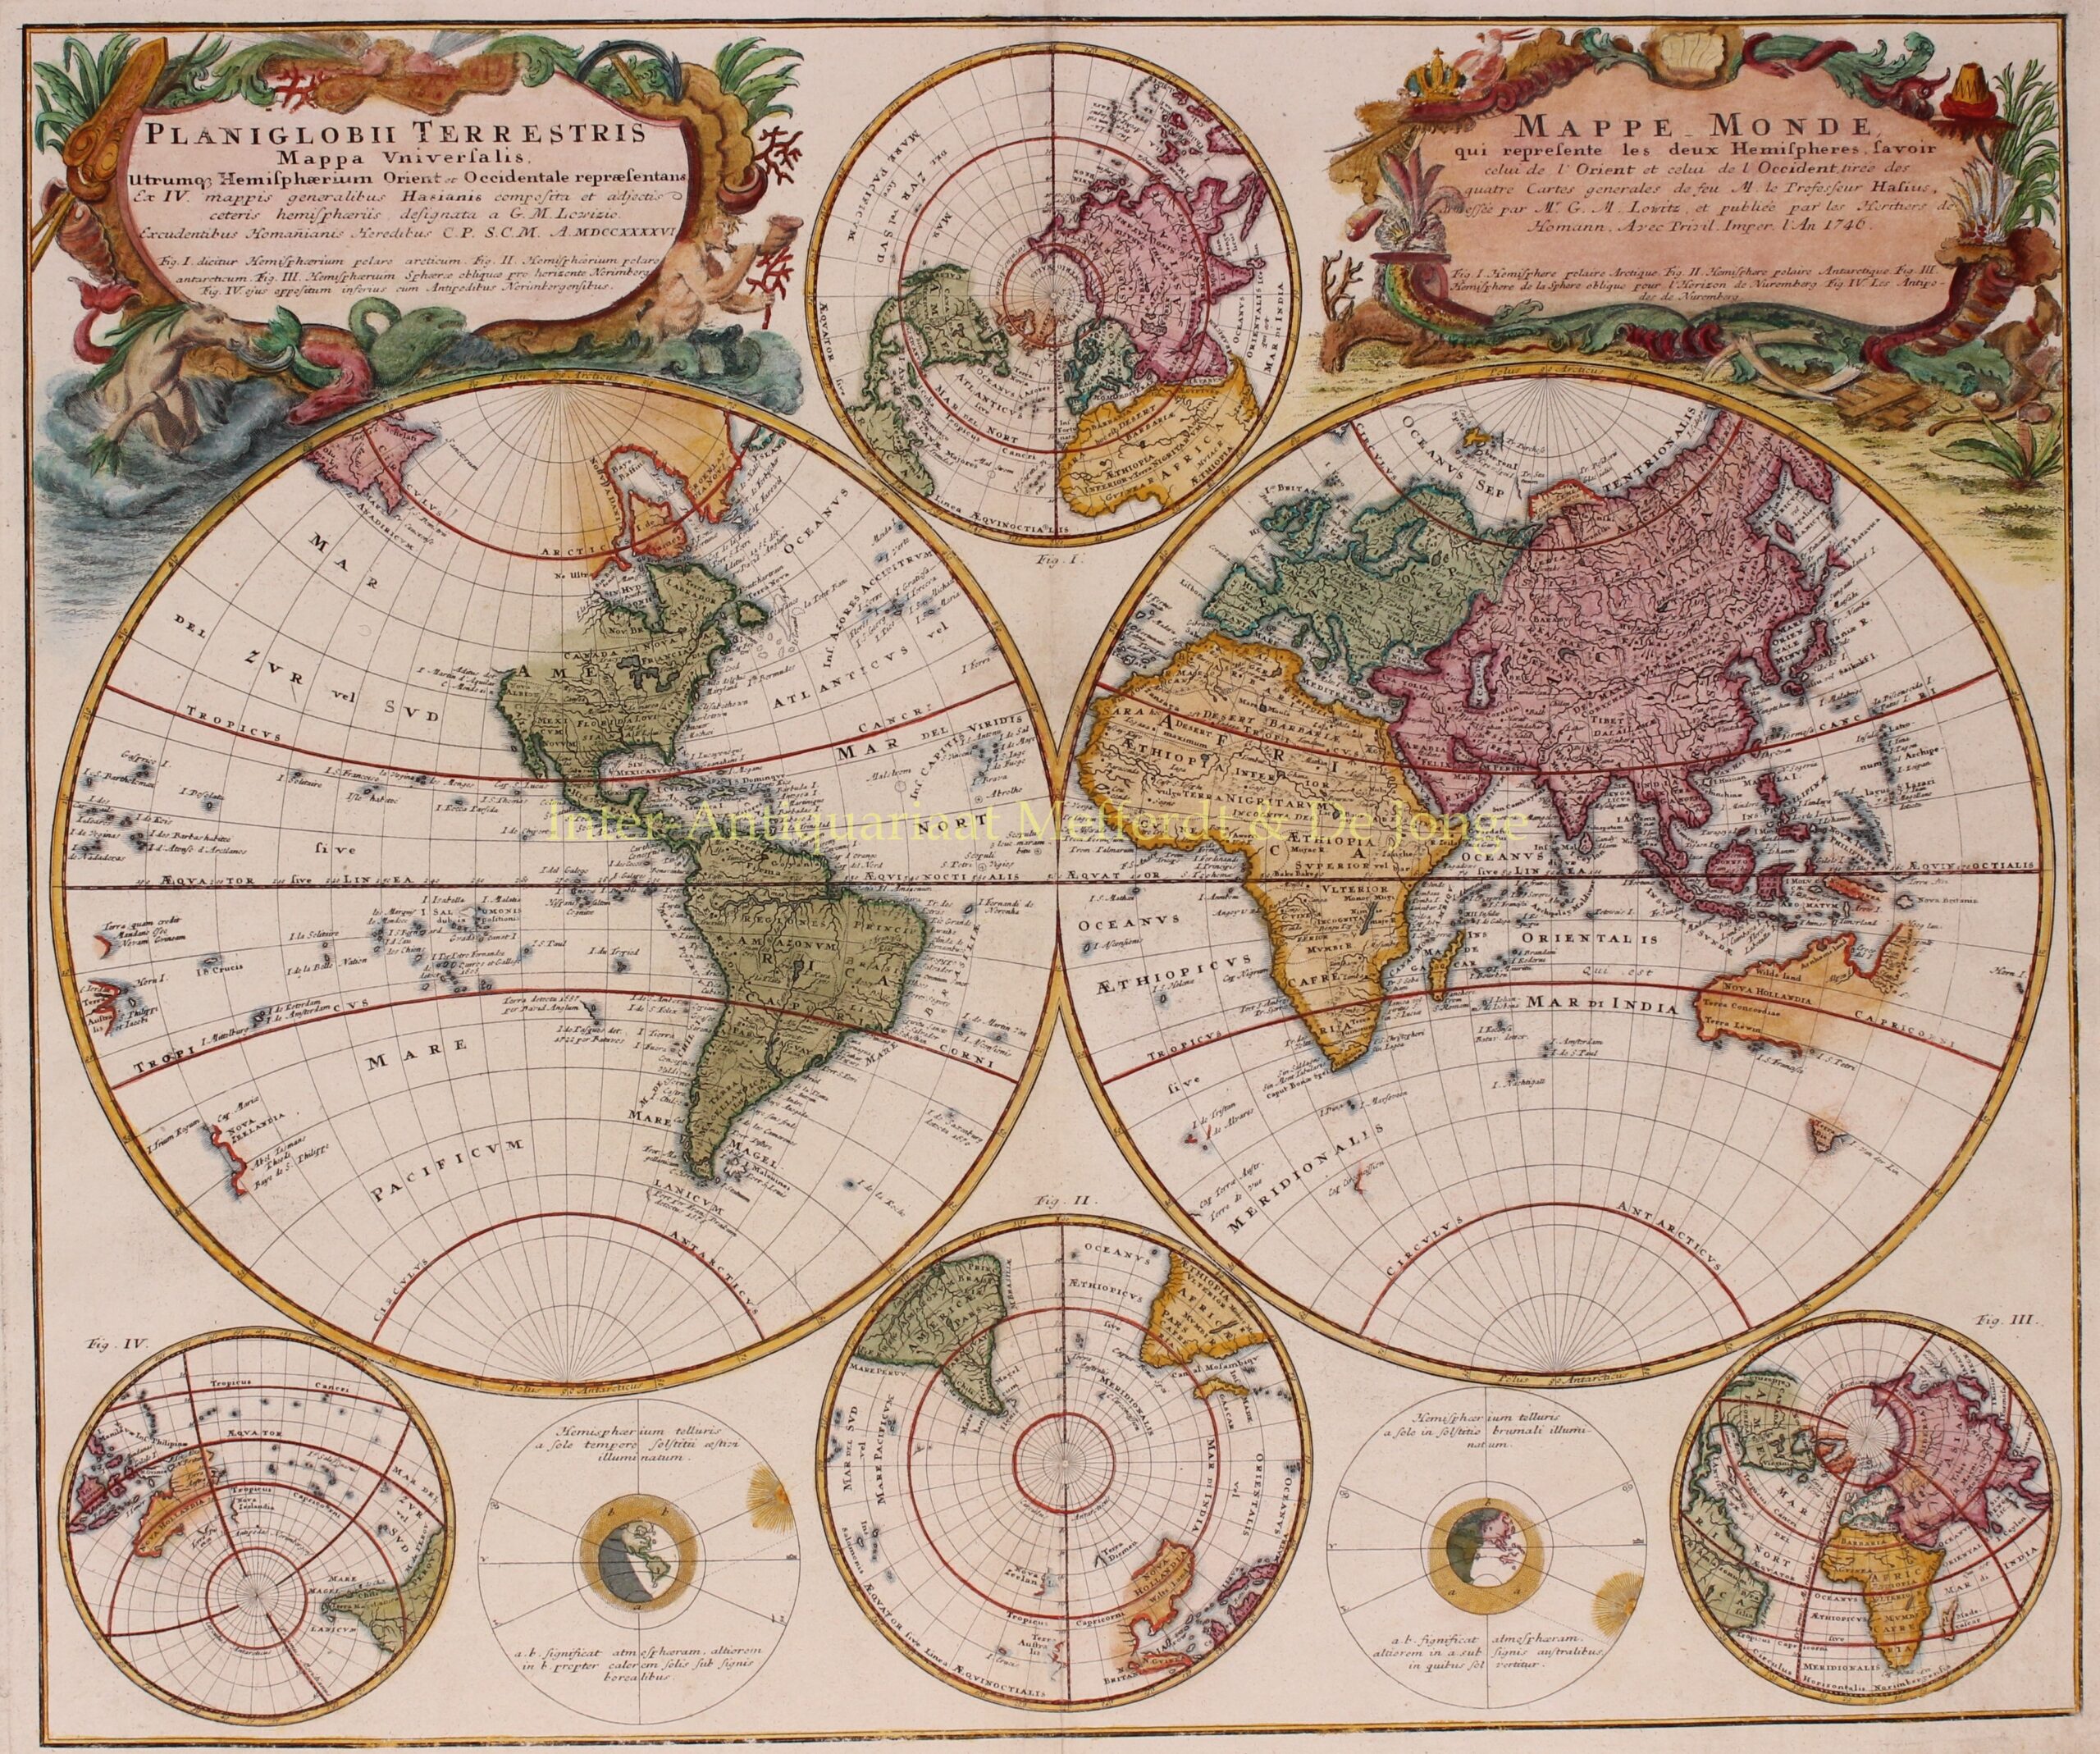 Homann Heirs - World map - Homann heirs, 1746